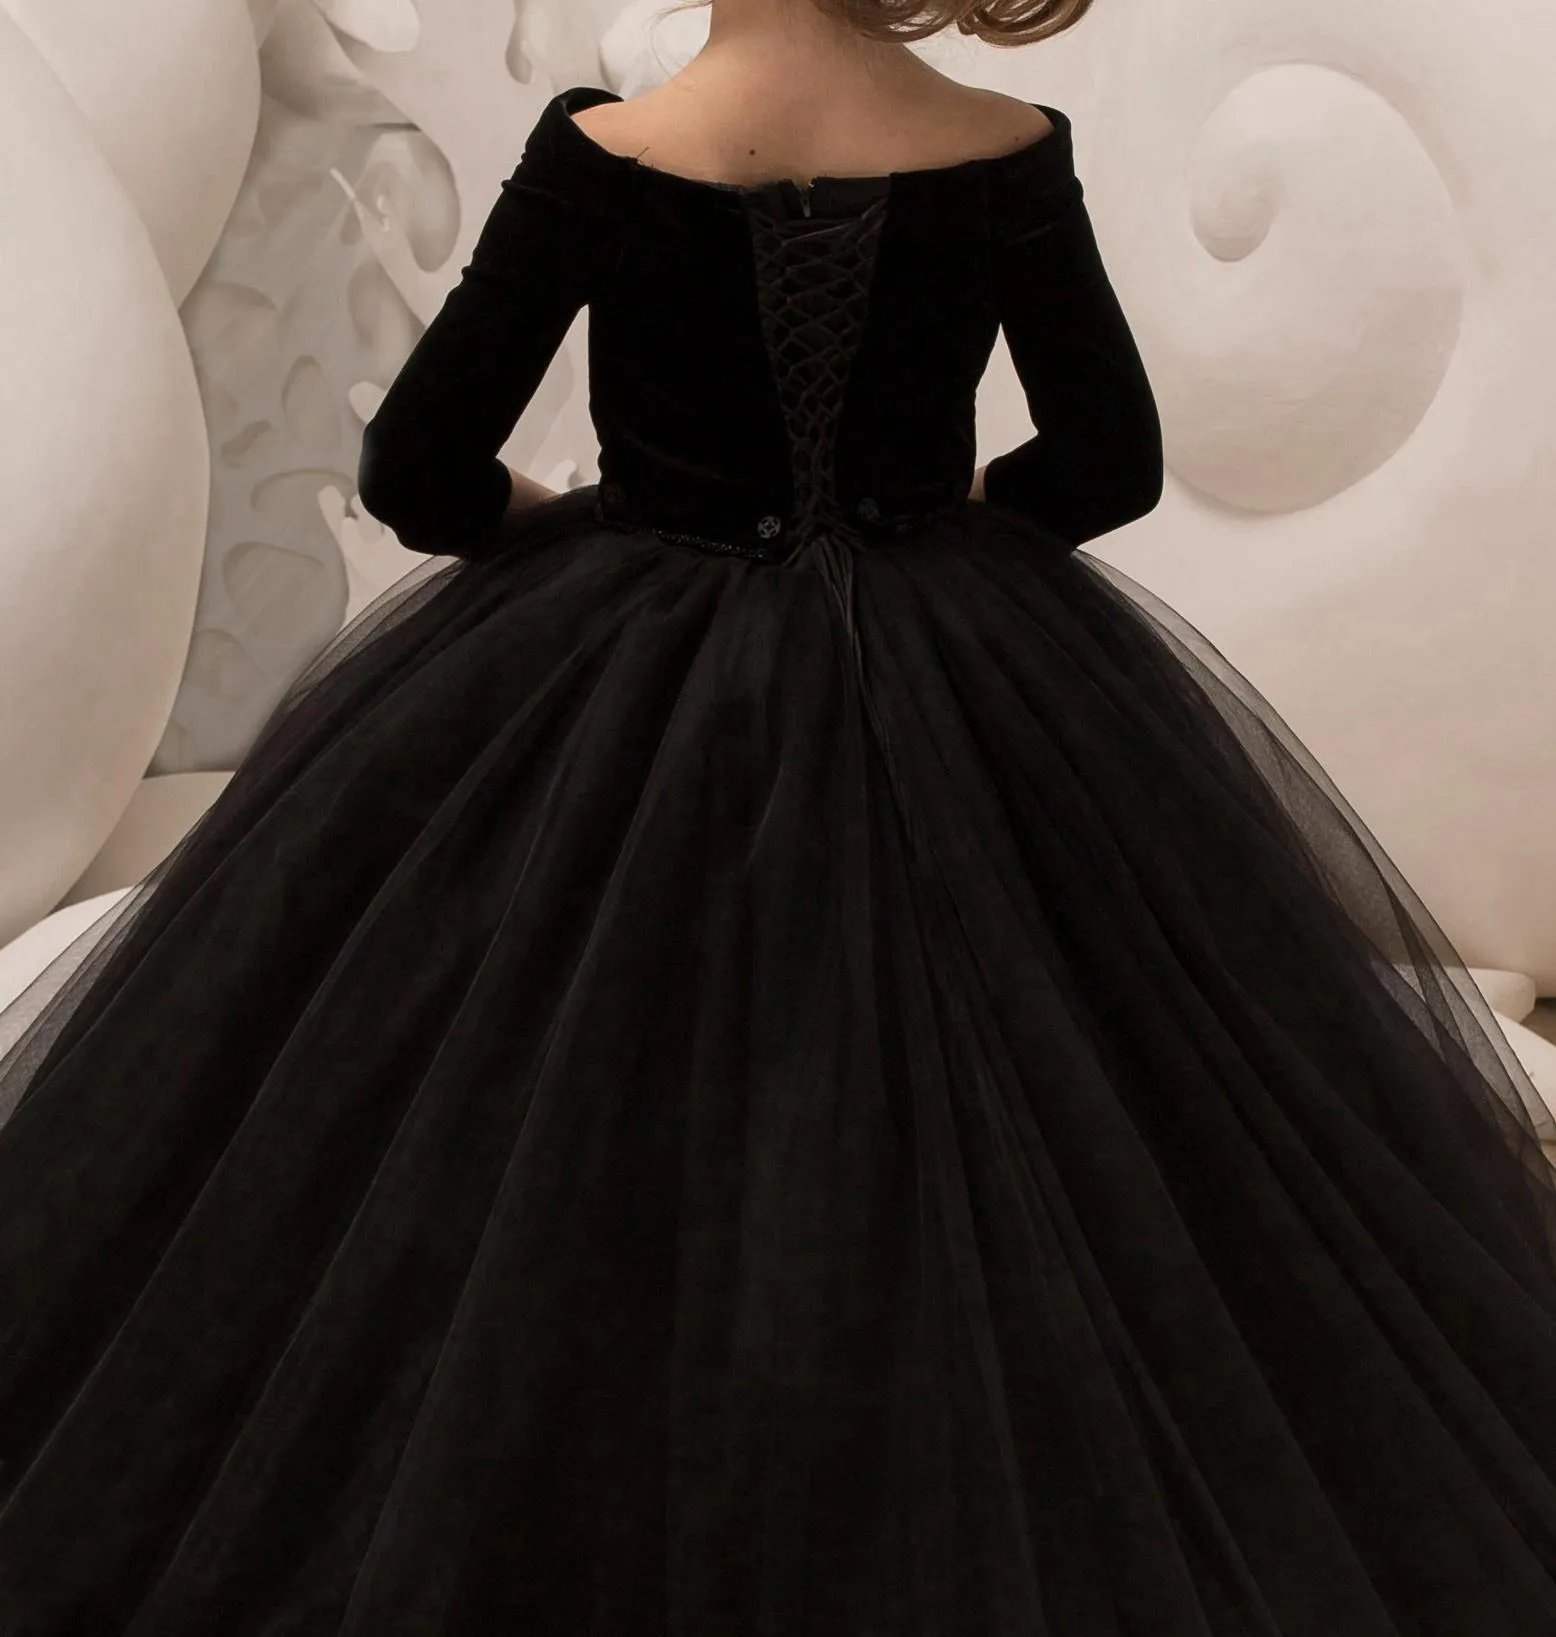 Princess-cut black wedding dress with sweetheart neckline